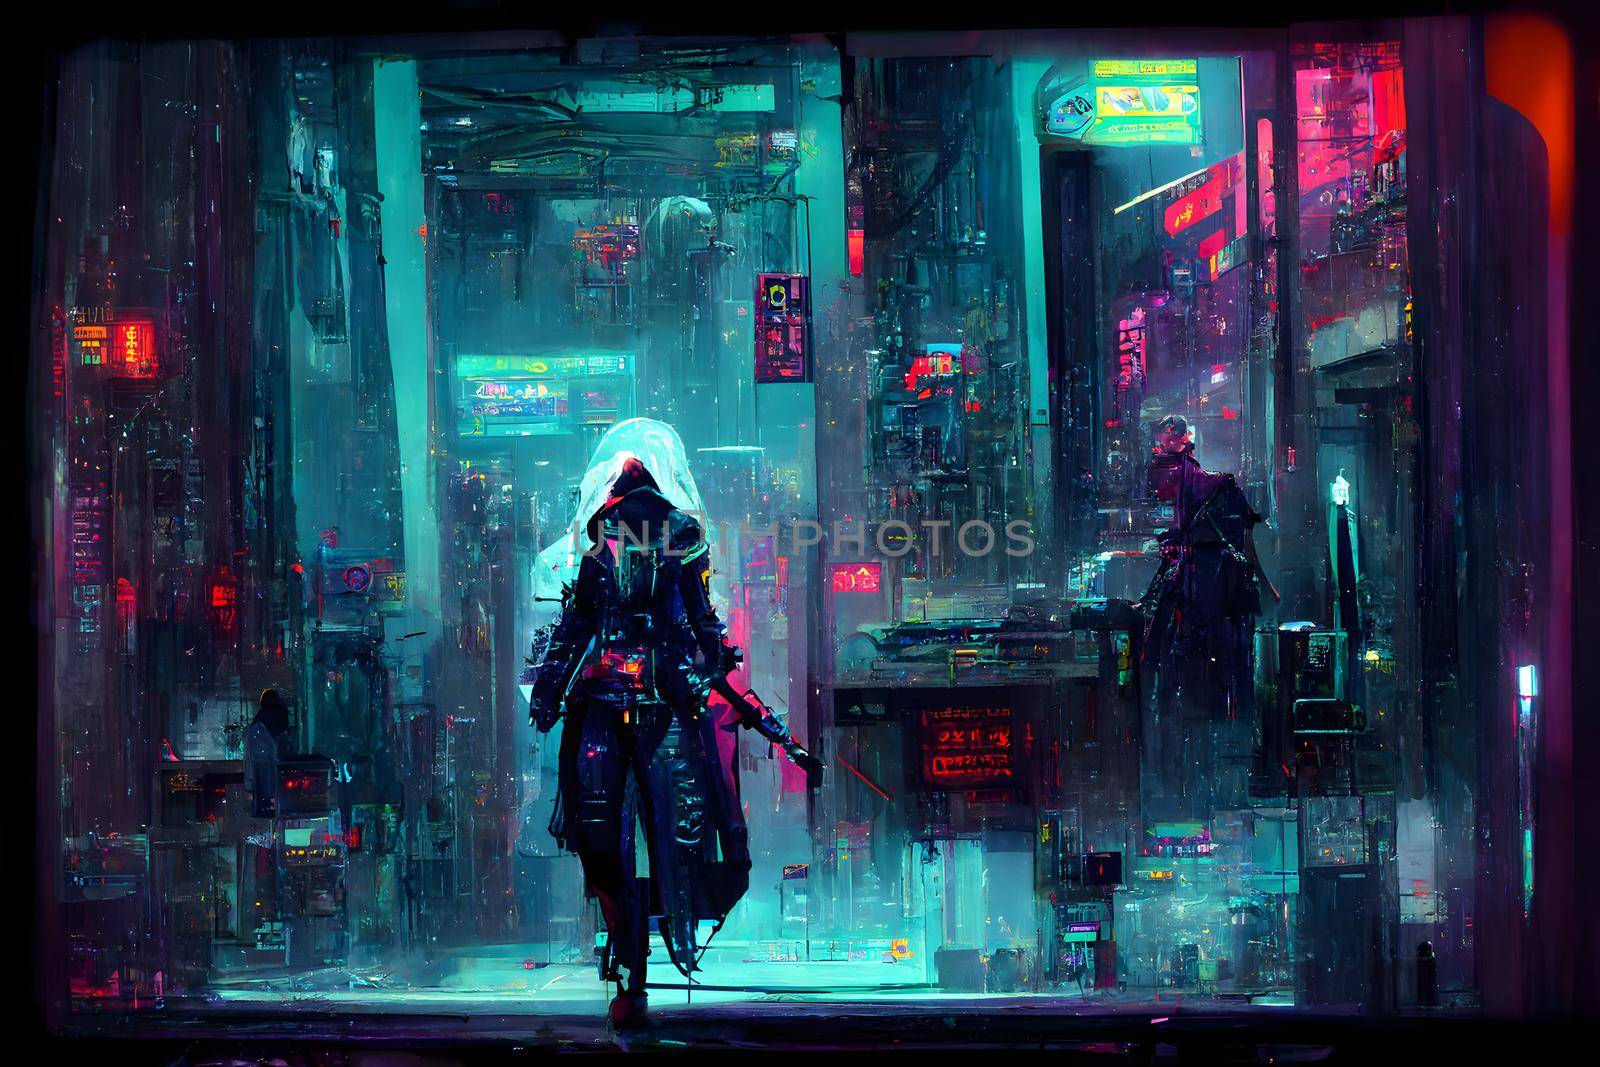 cyberpunk assasin figure in night cyberpunk style neon illuminated city environment, neural network generated art by z1b